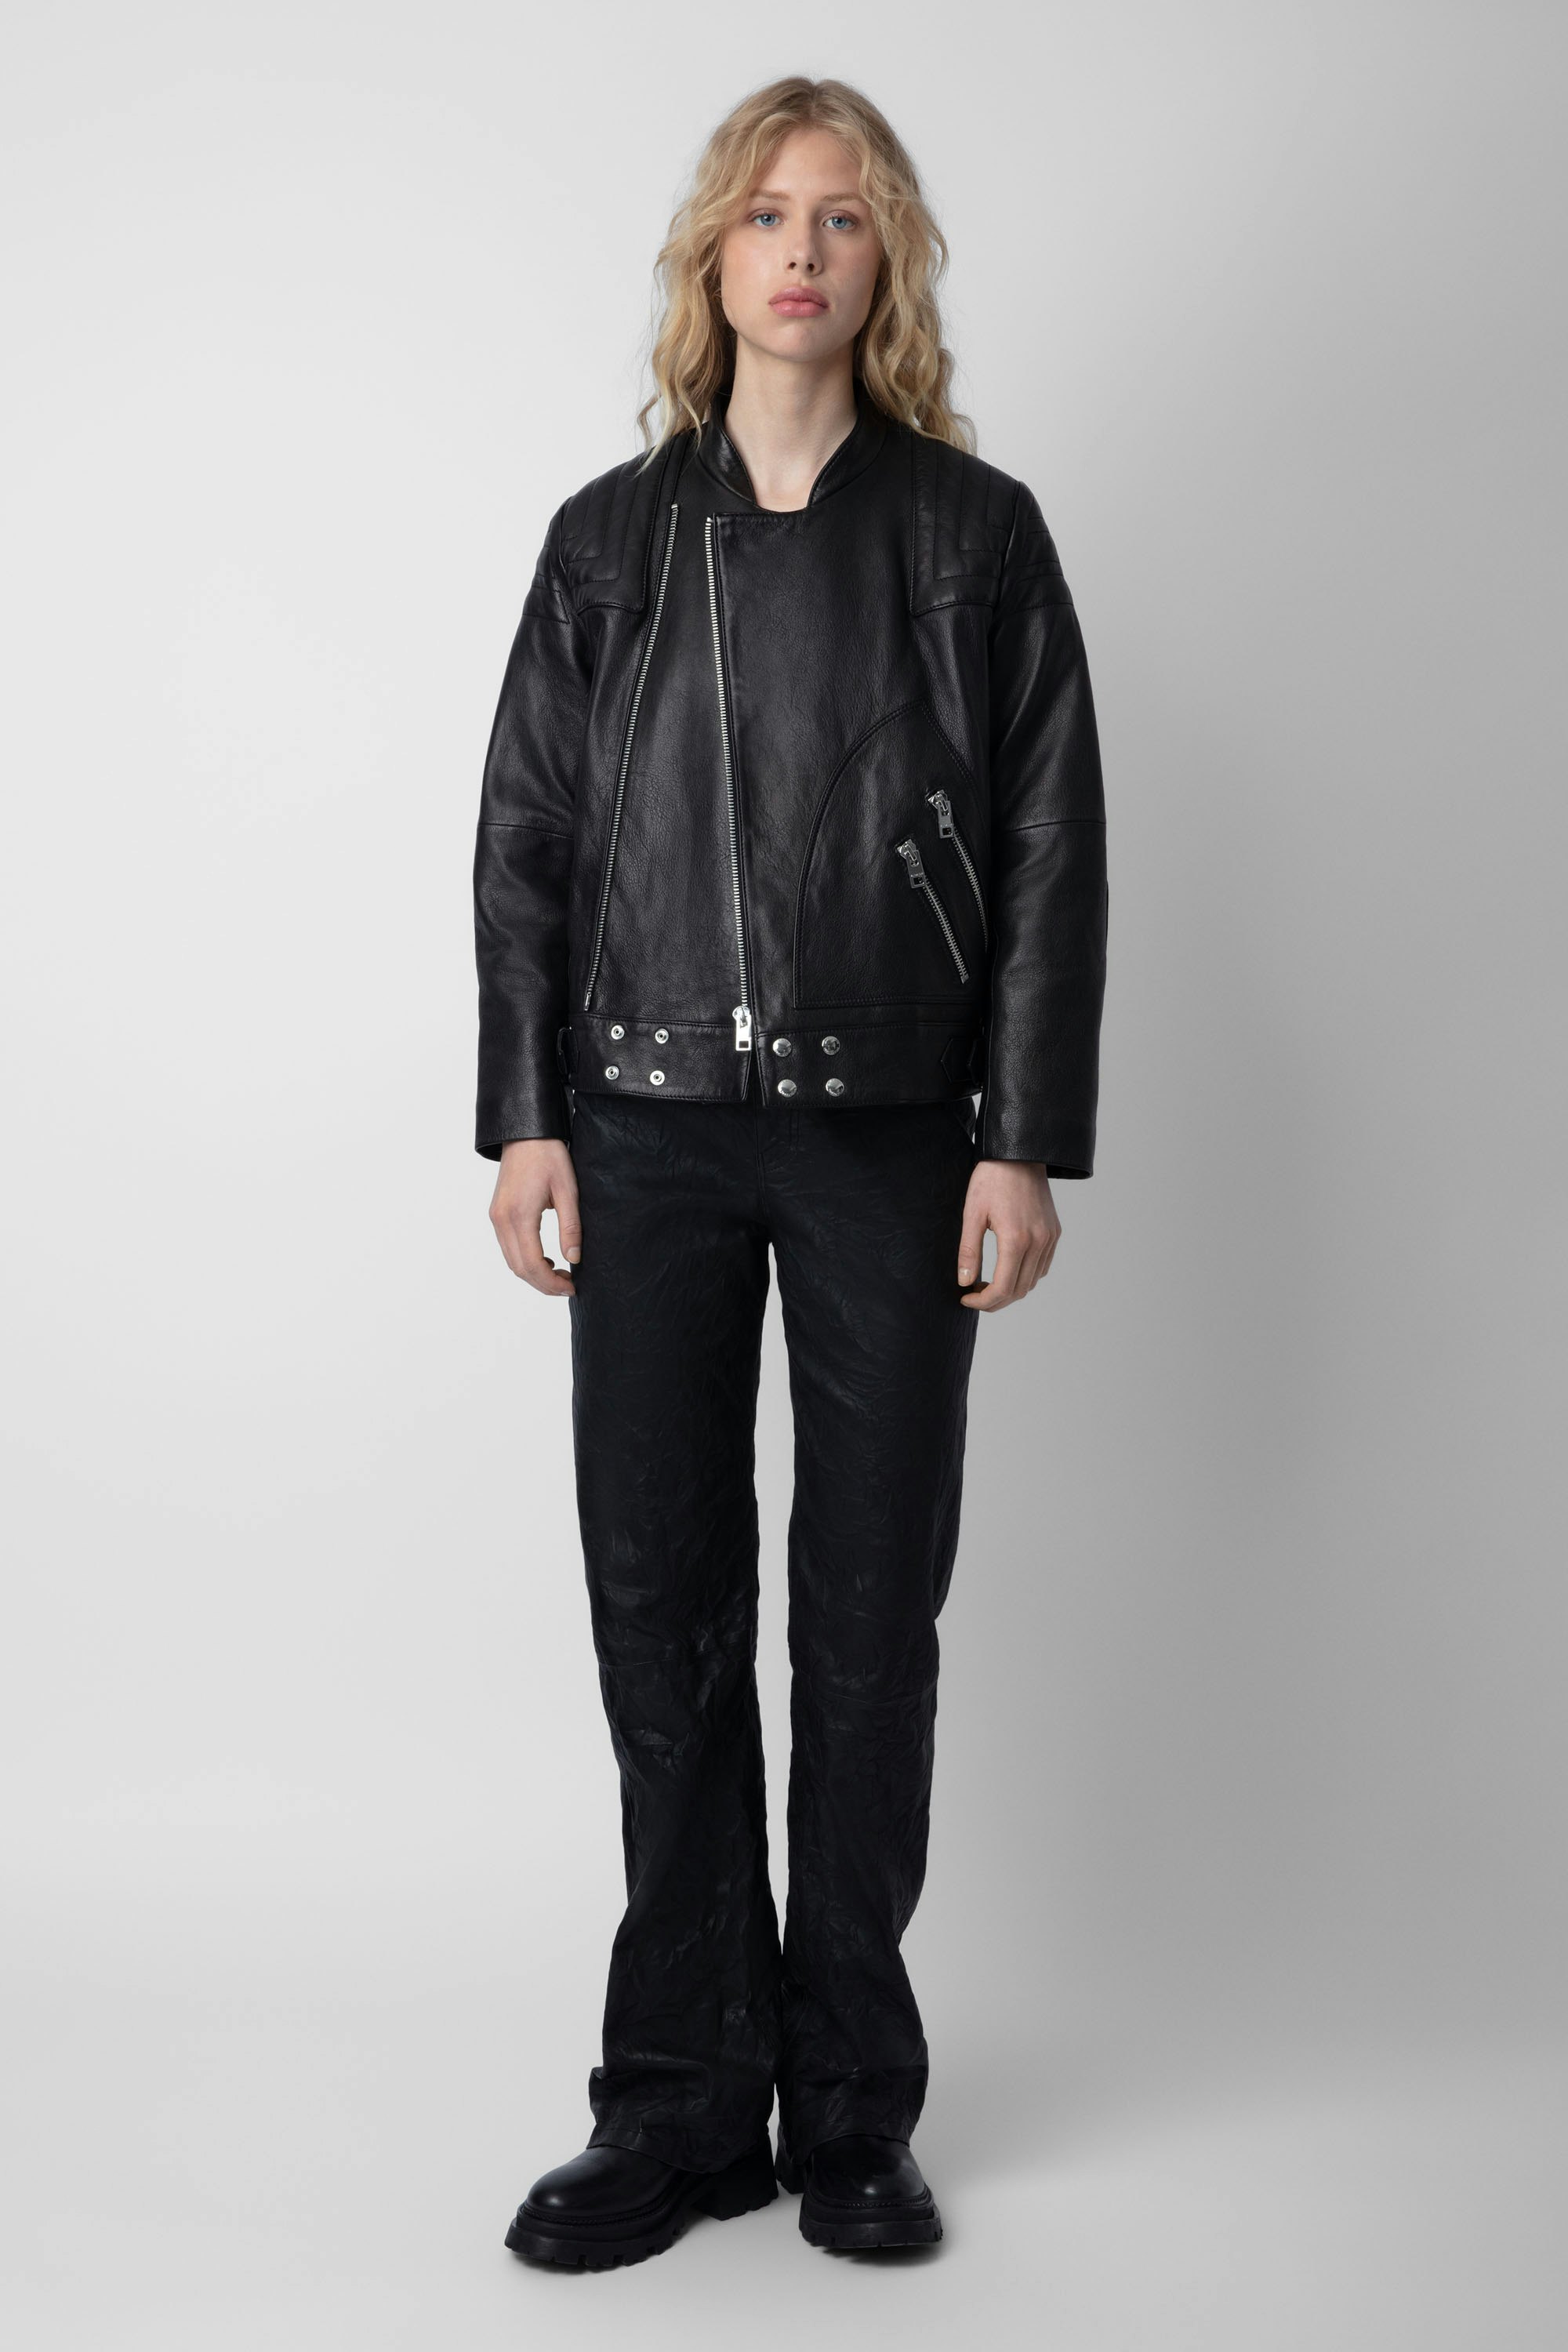 Liliam Leather Jacket - Women’s black leather biker jacket.